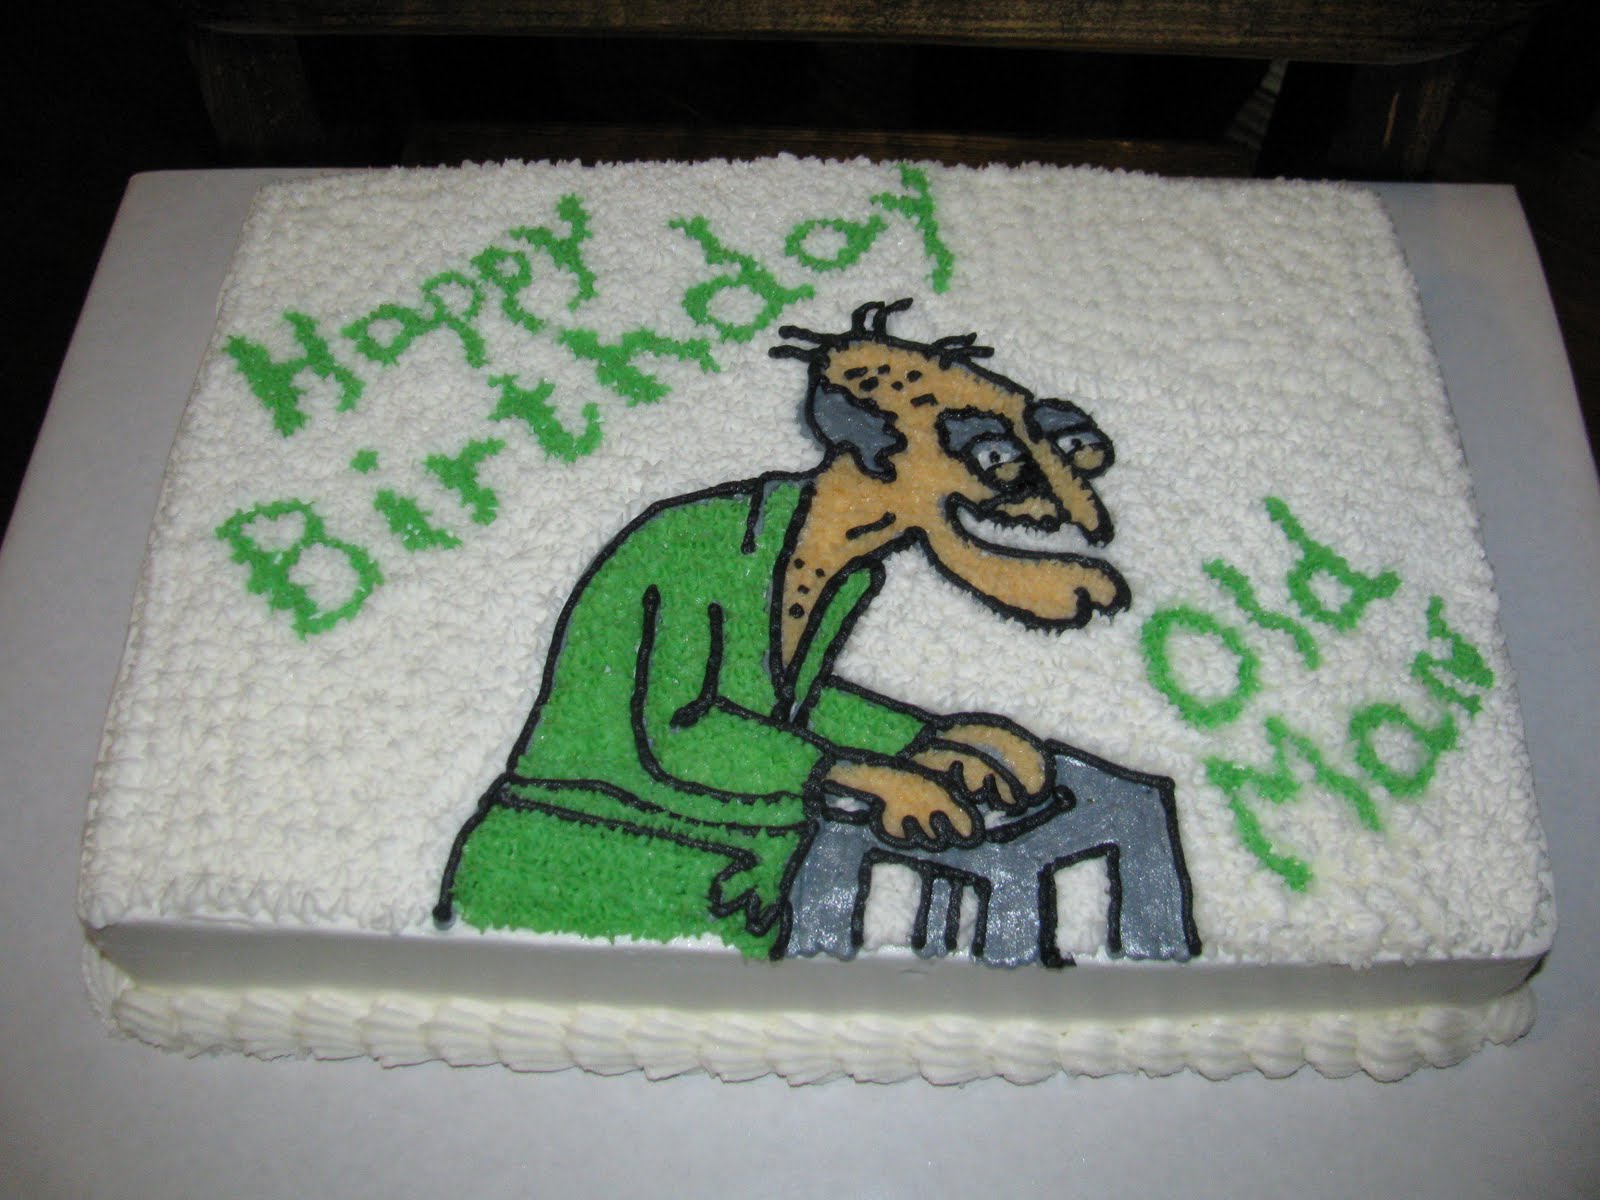 Old Man Birthday Cake